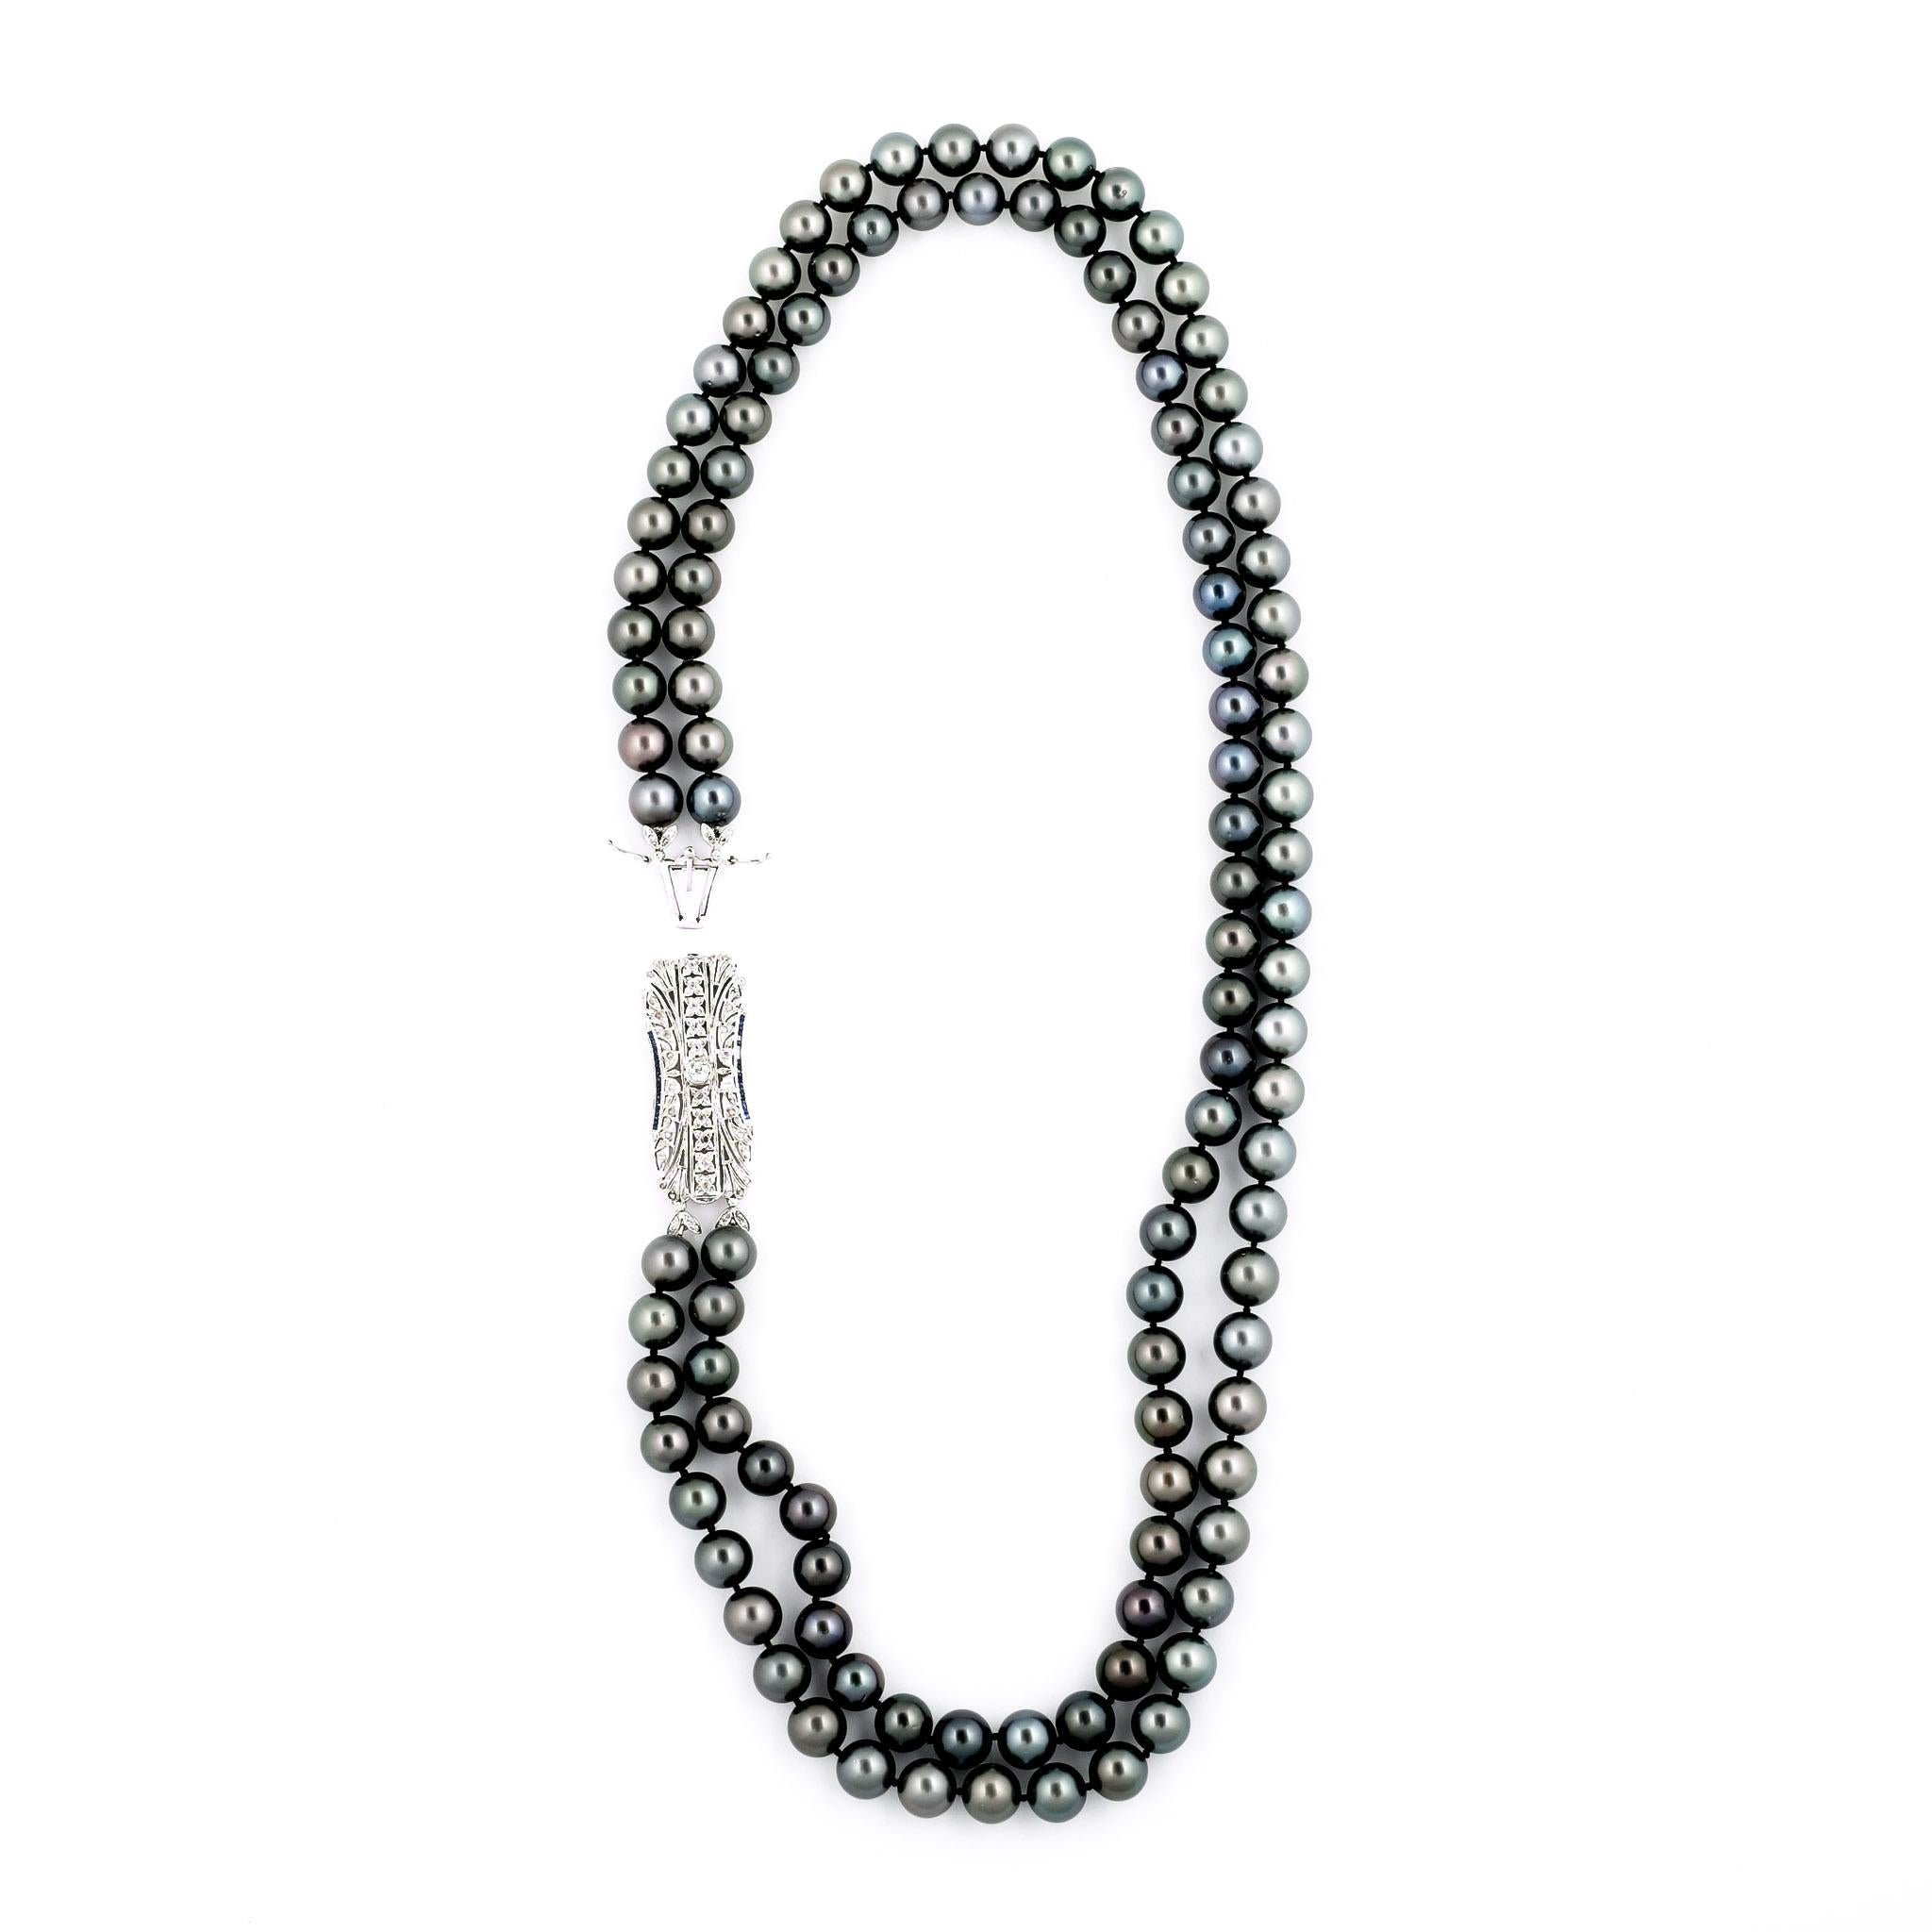 3 strand black pearl necklace